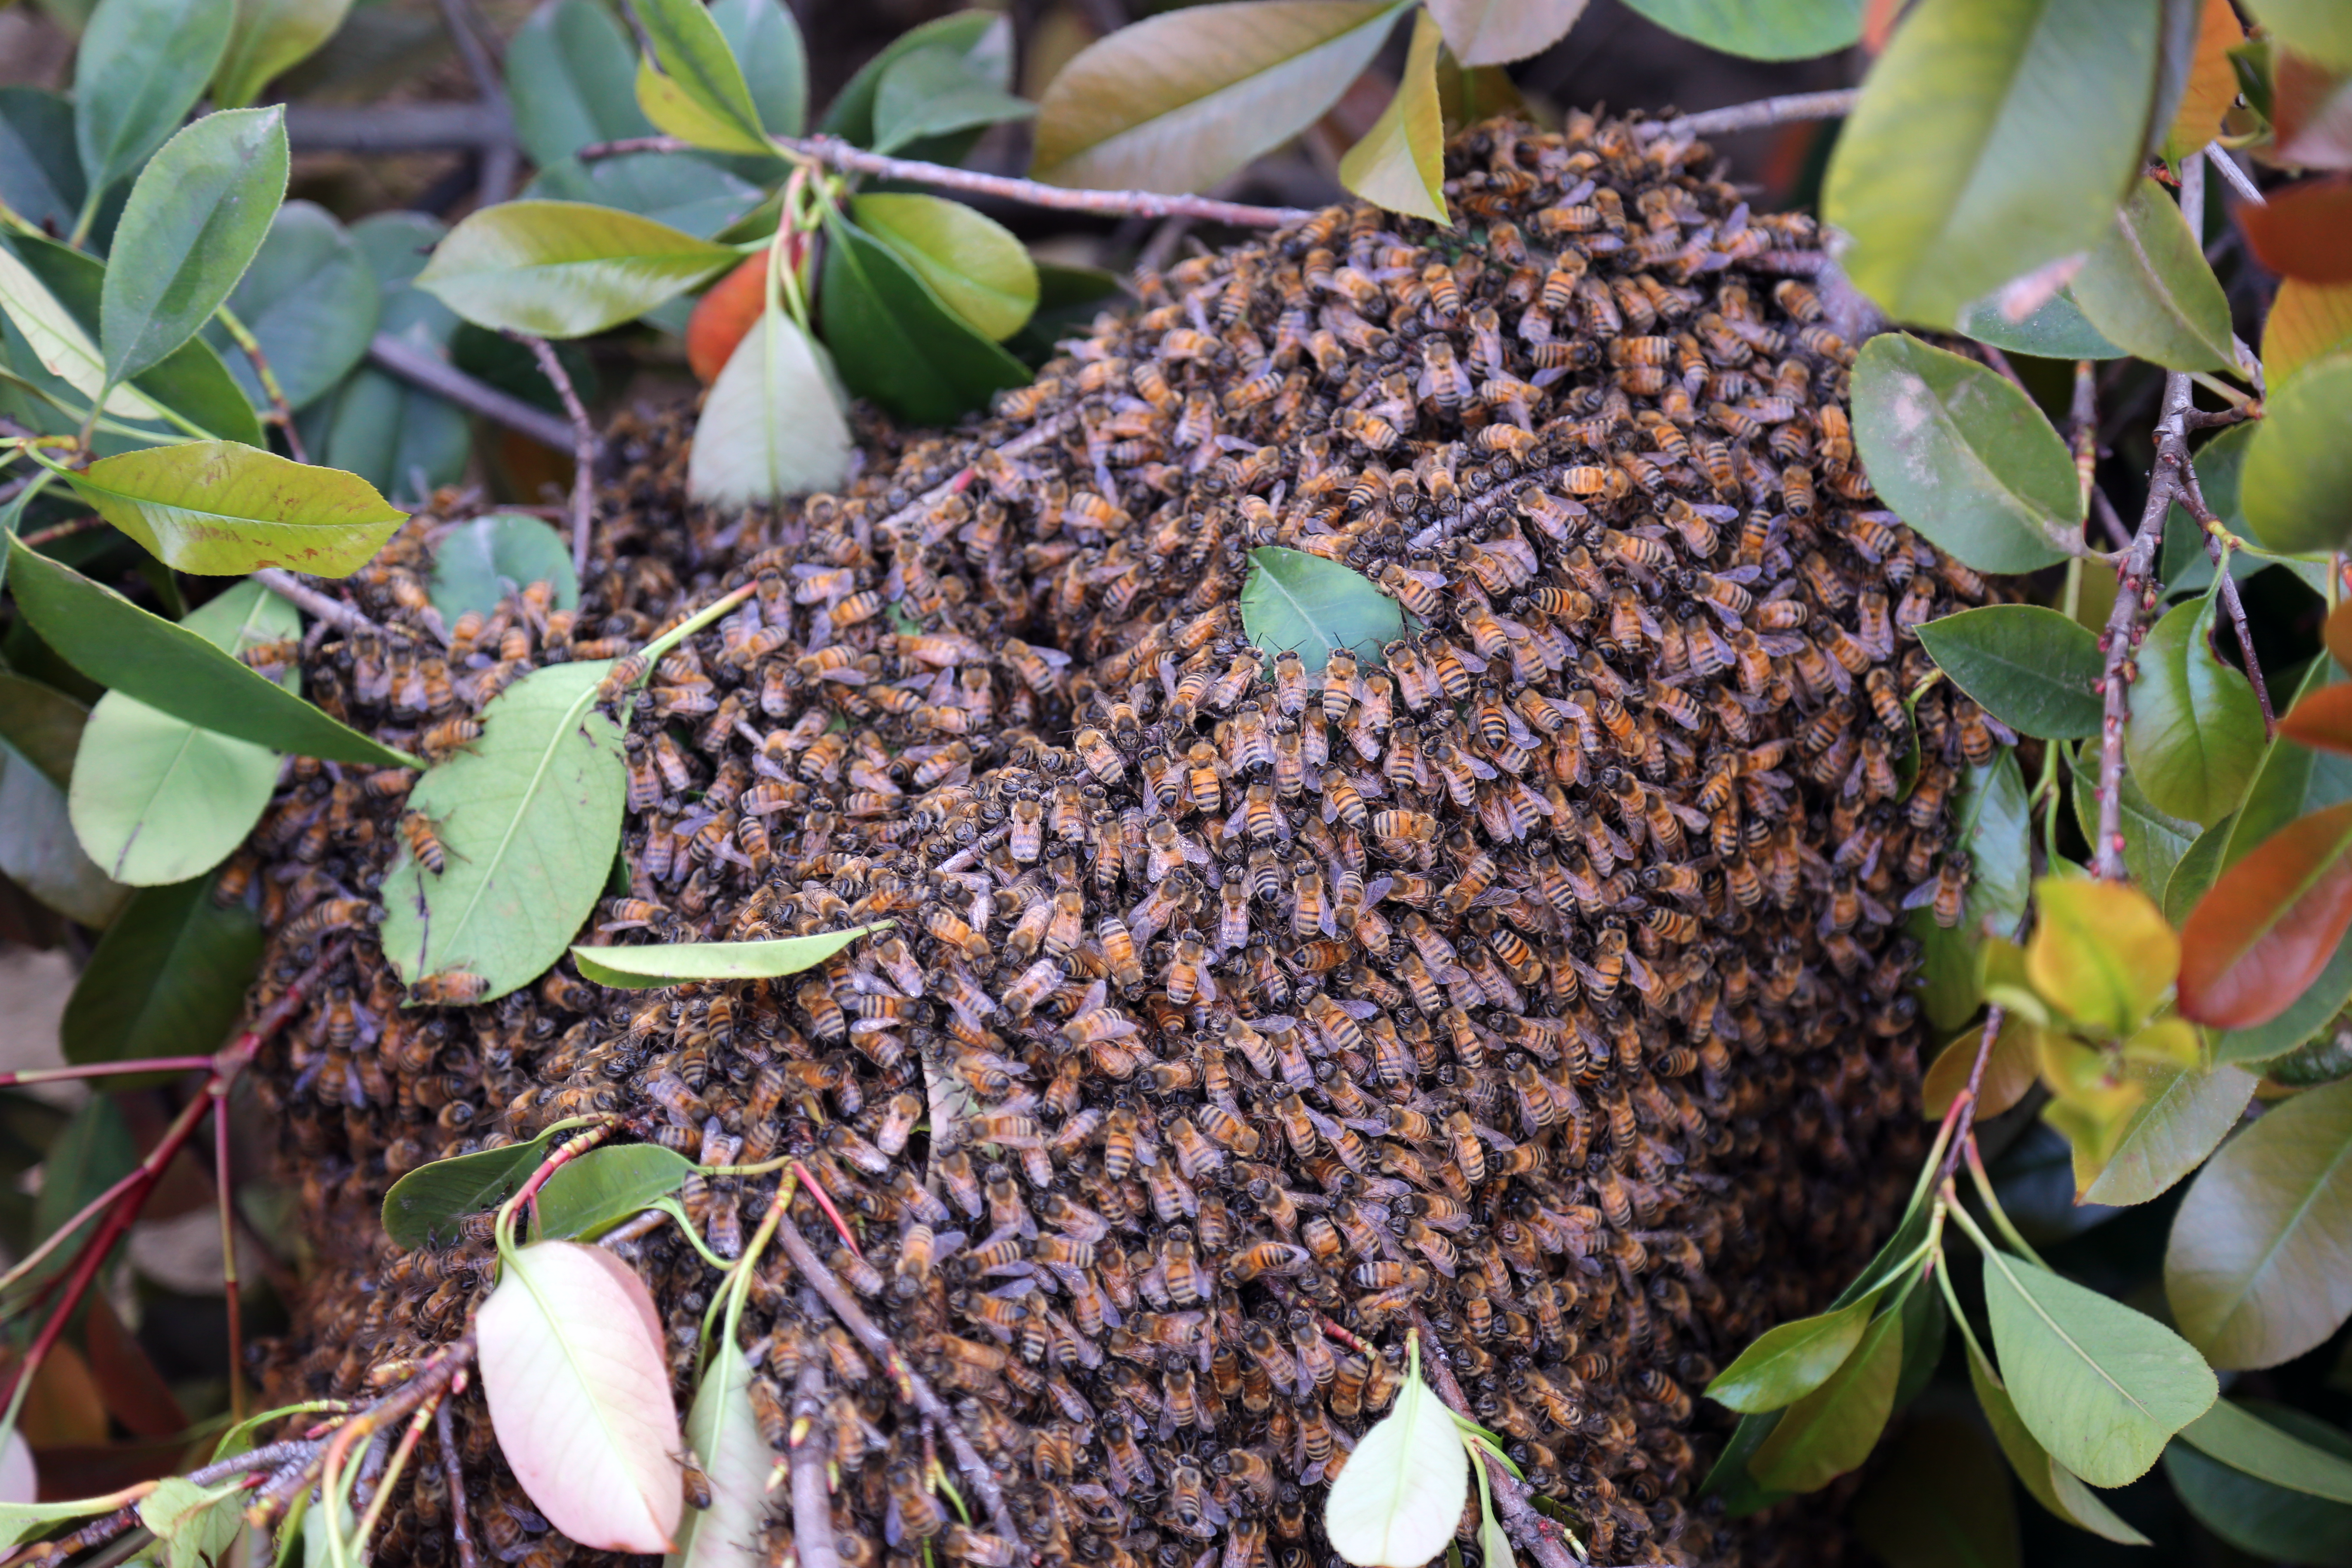 Bee Swarm on Bush